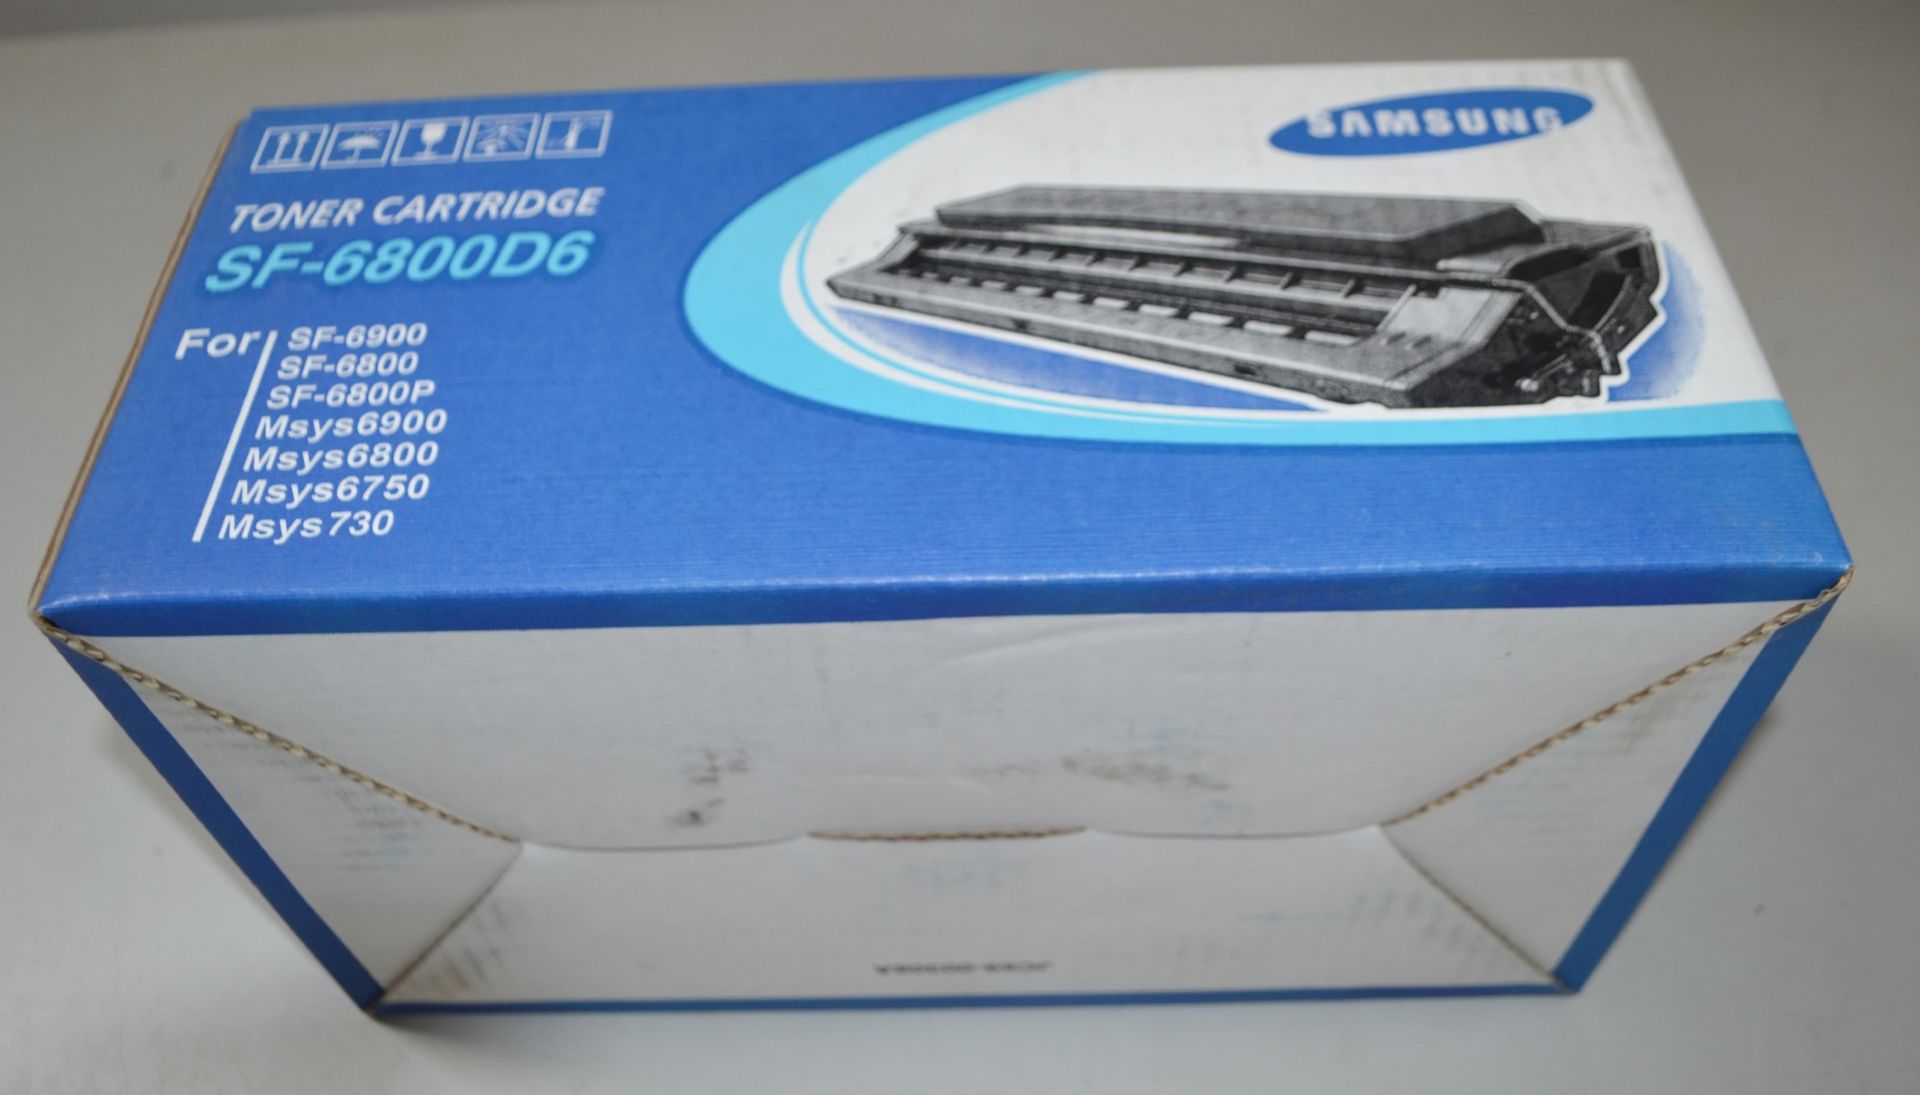 1 x New Samsung Toner Cartridge SF-6800D6 - Ref: LD352 - CL409 - Altrincham WA14 - Image 3 of 4